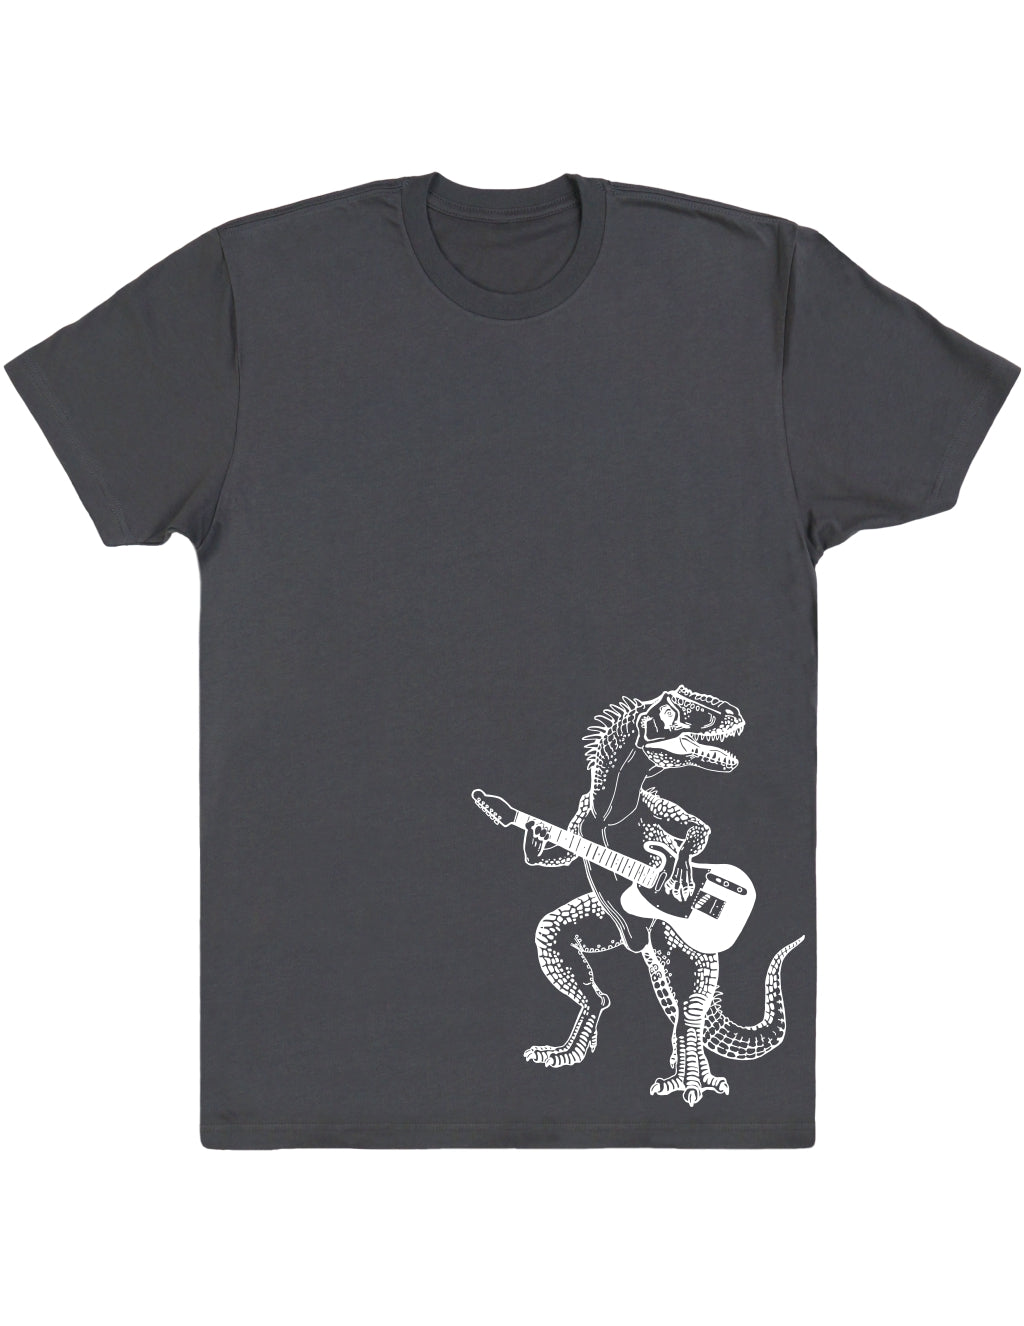 SEEMBO Dinosaur Playing Guitar Men's Cotton T-Shirt Side Print